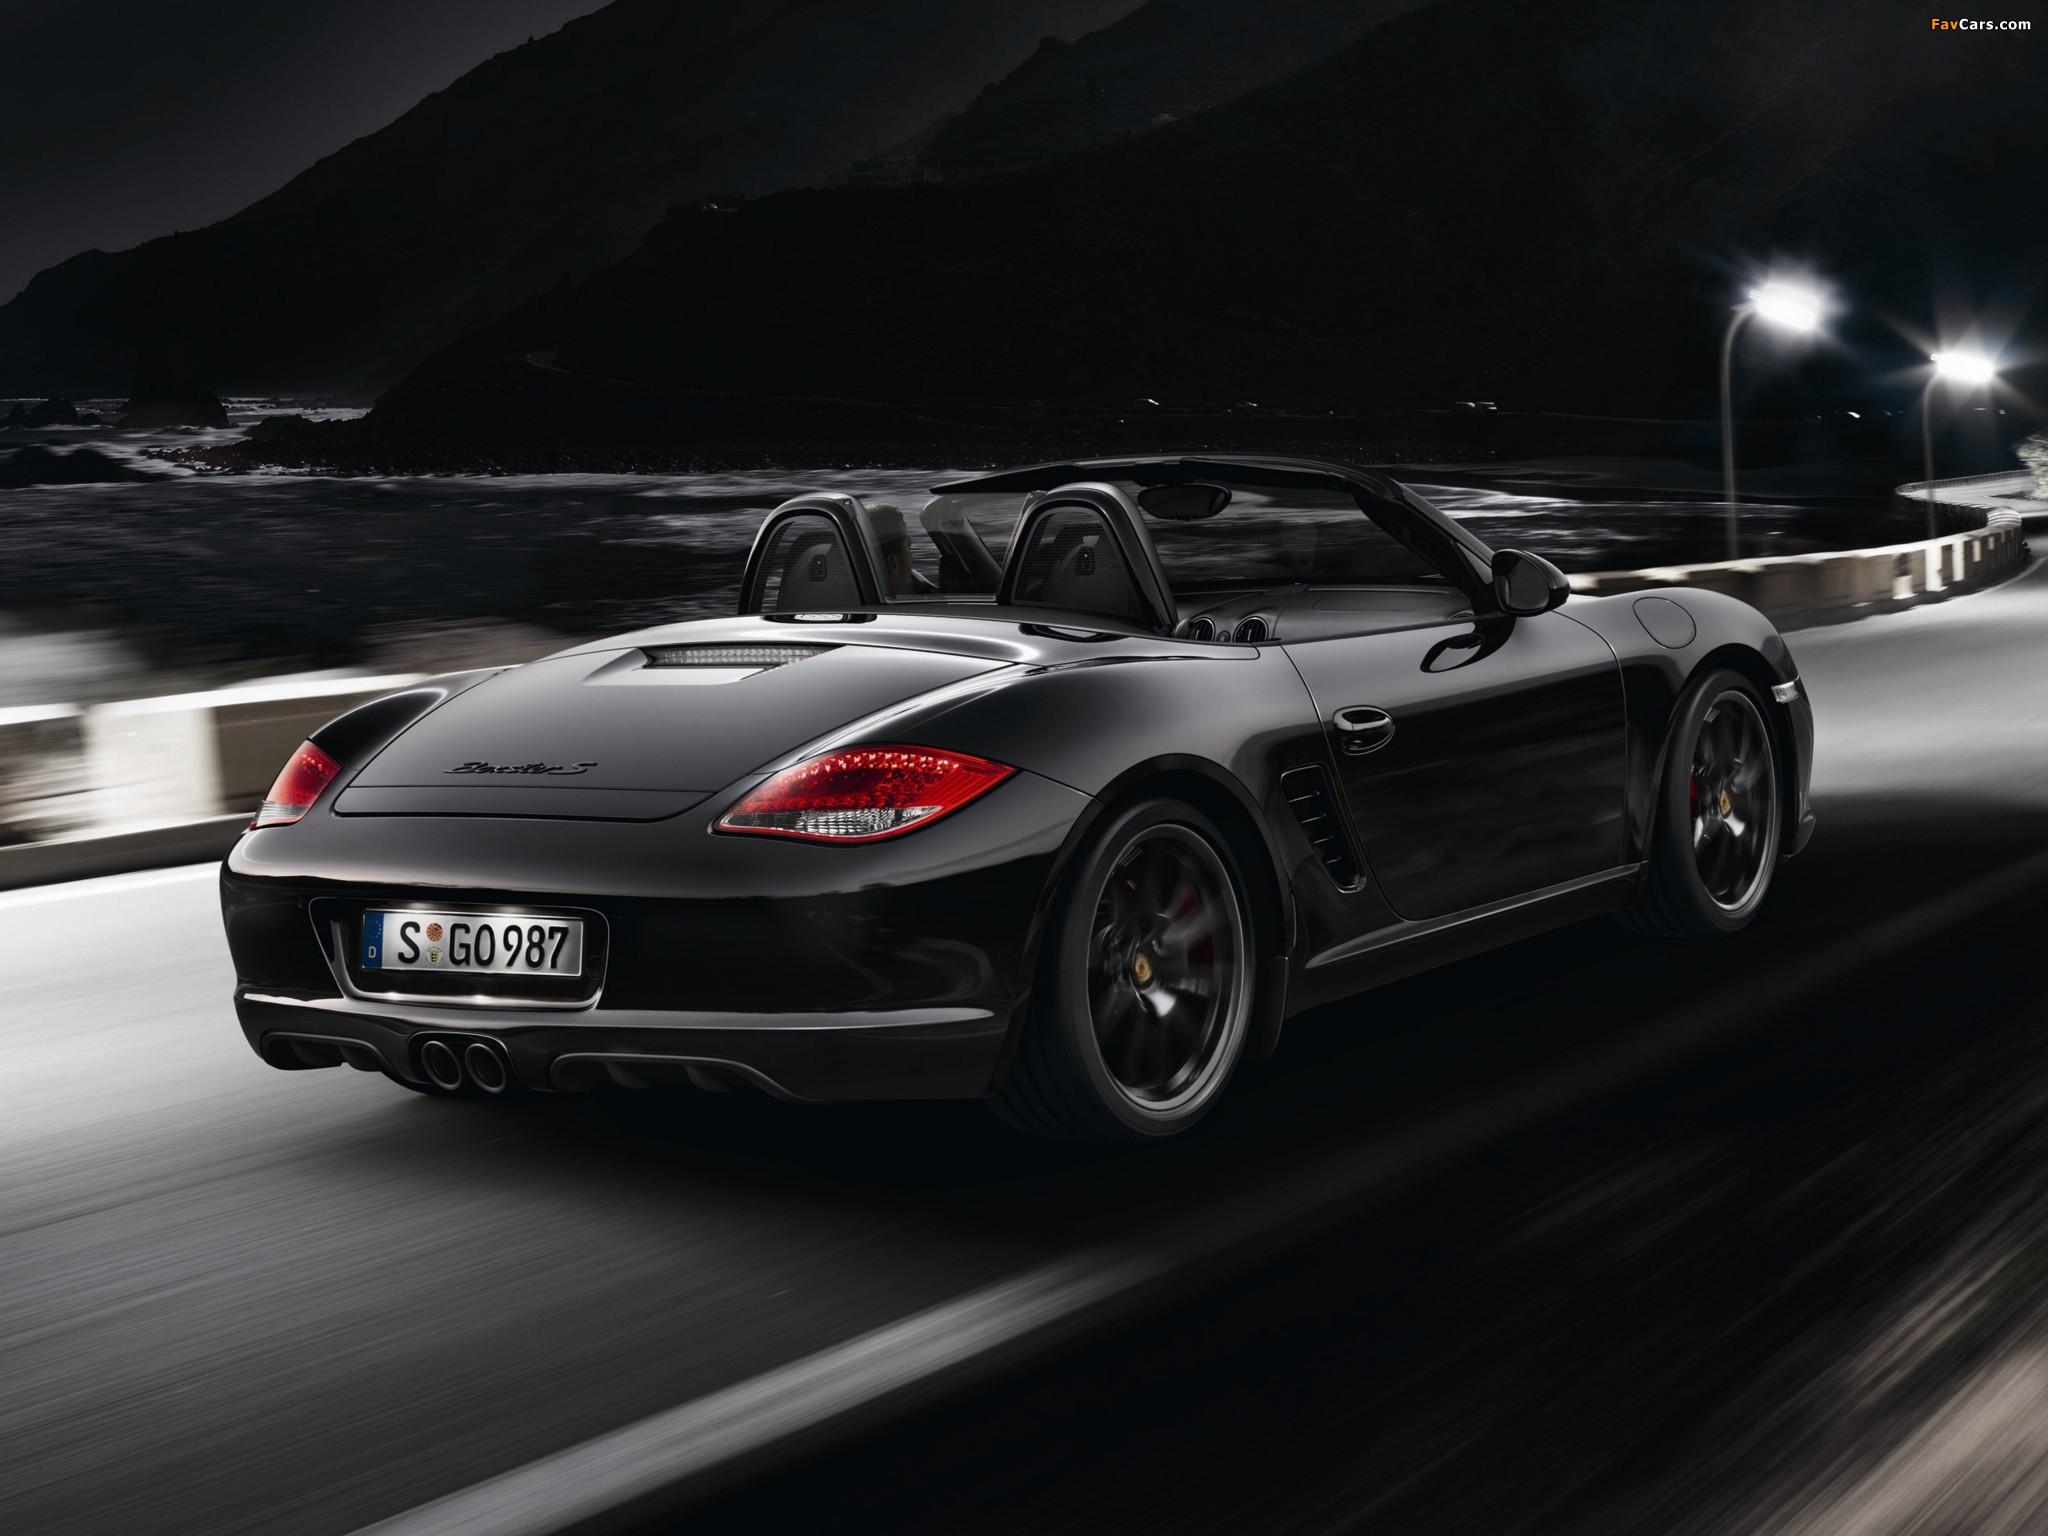 Porsche Boxster S Black Edition (987) 2011 wallpaper